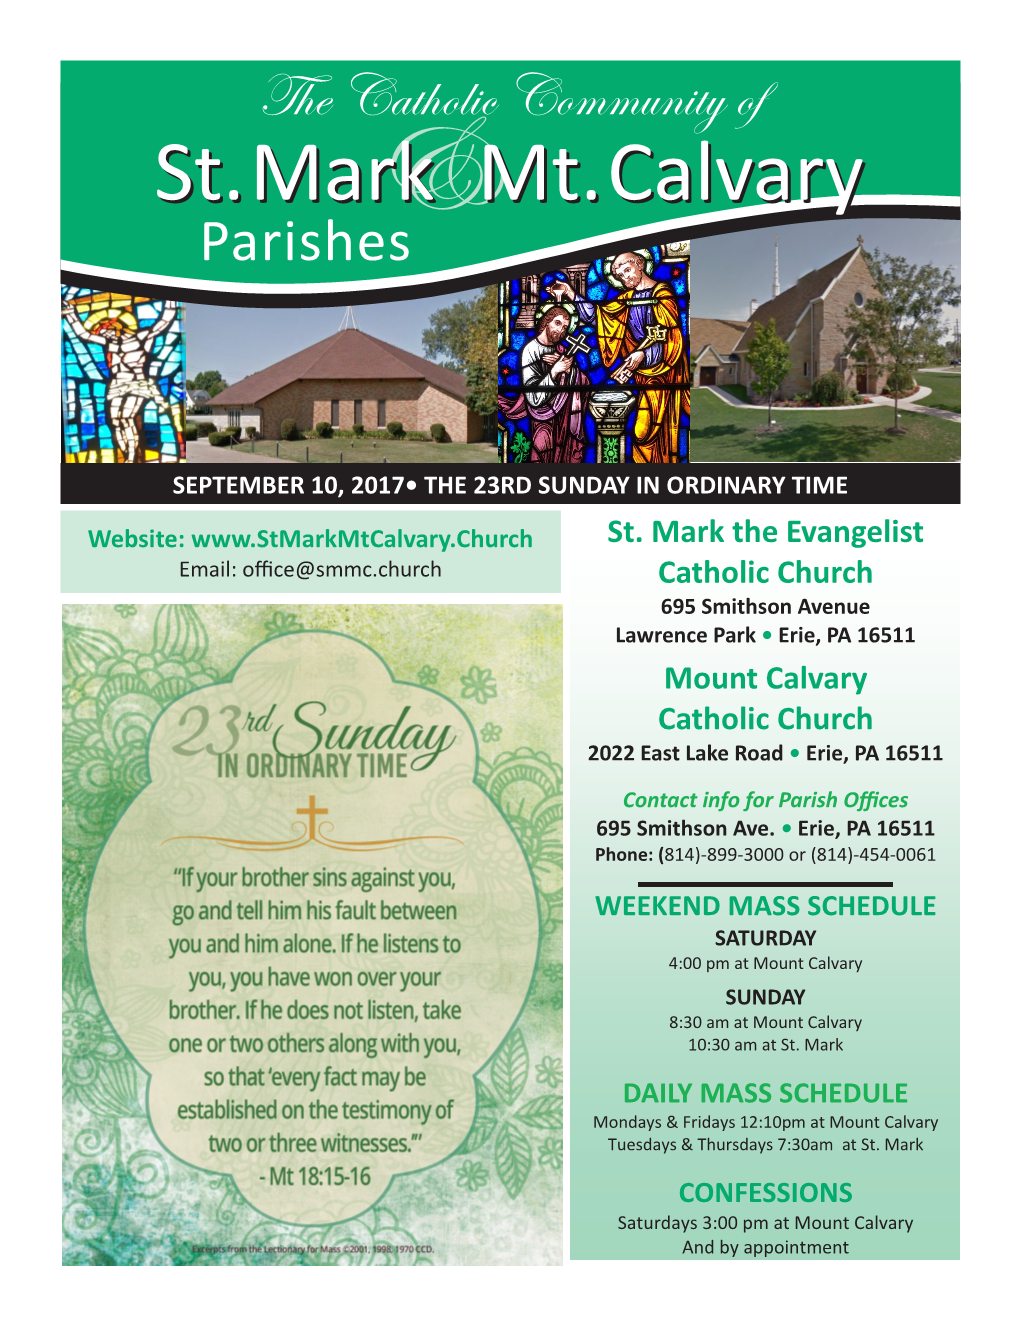 Mount Calvary Catholic Church 2022 East Lake Road • Erie, PA 16511